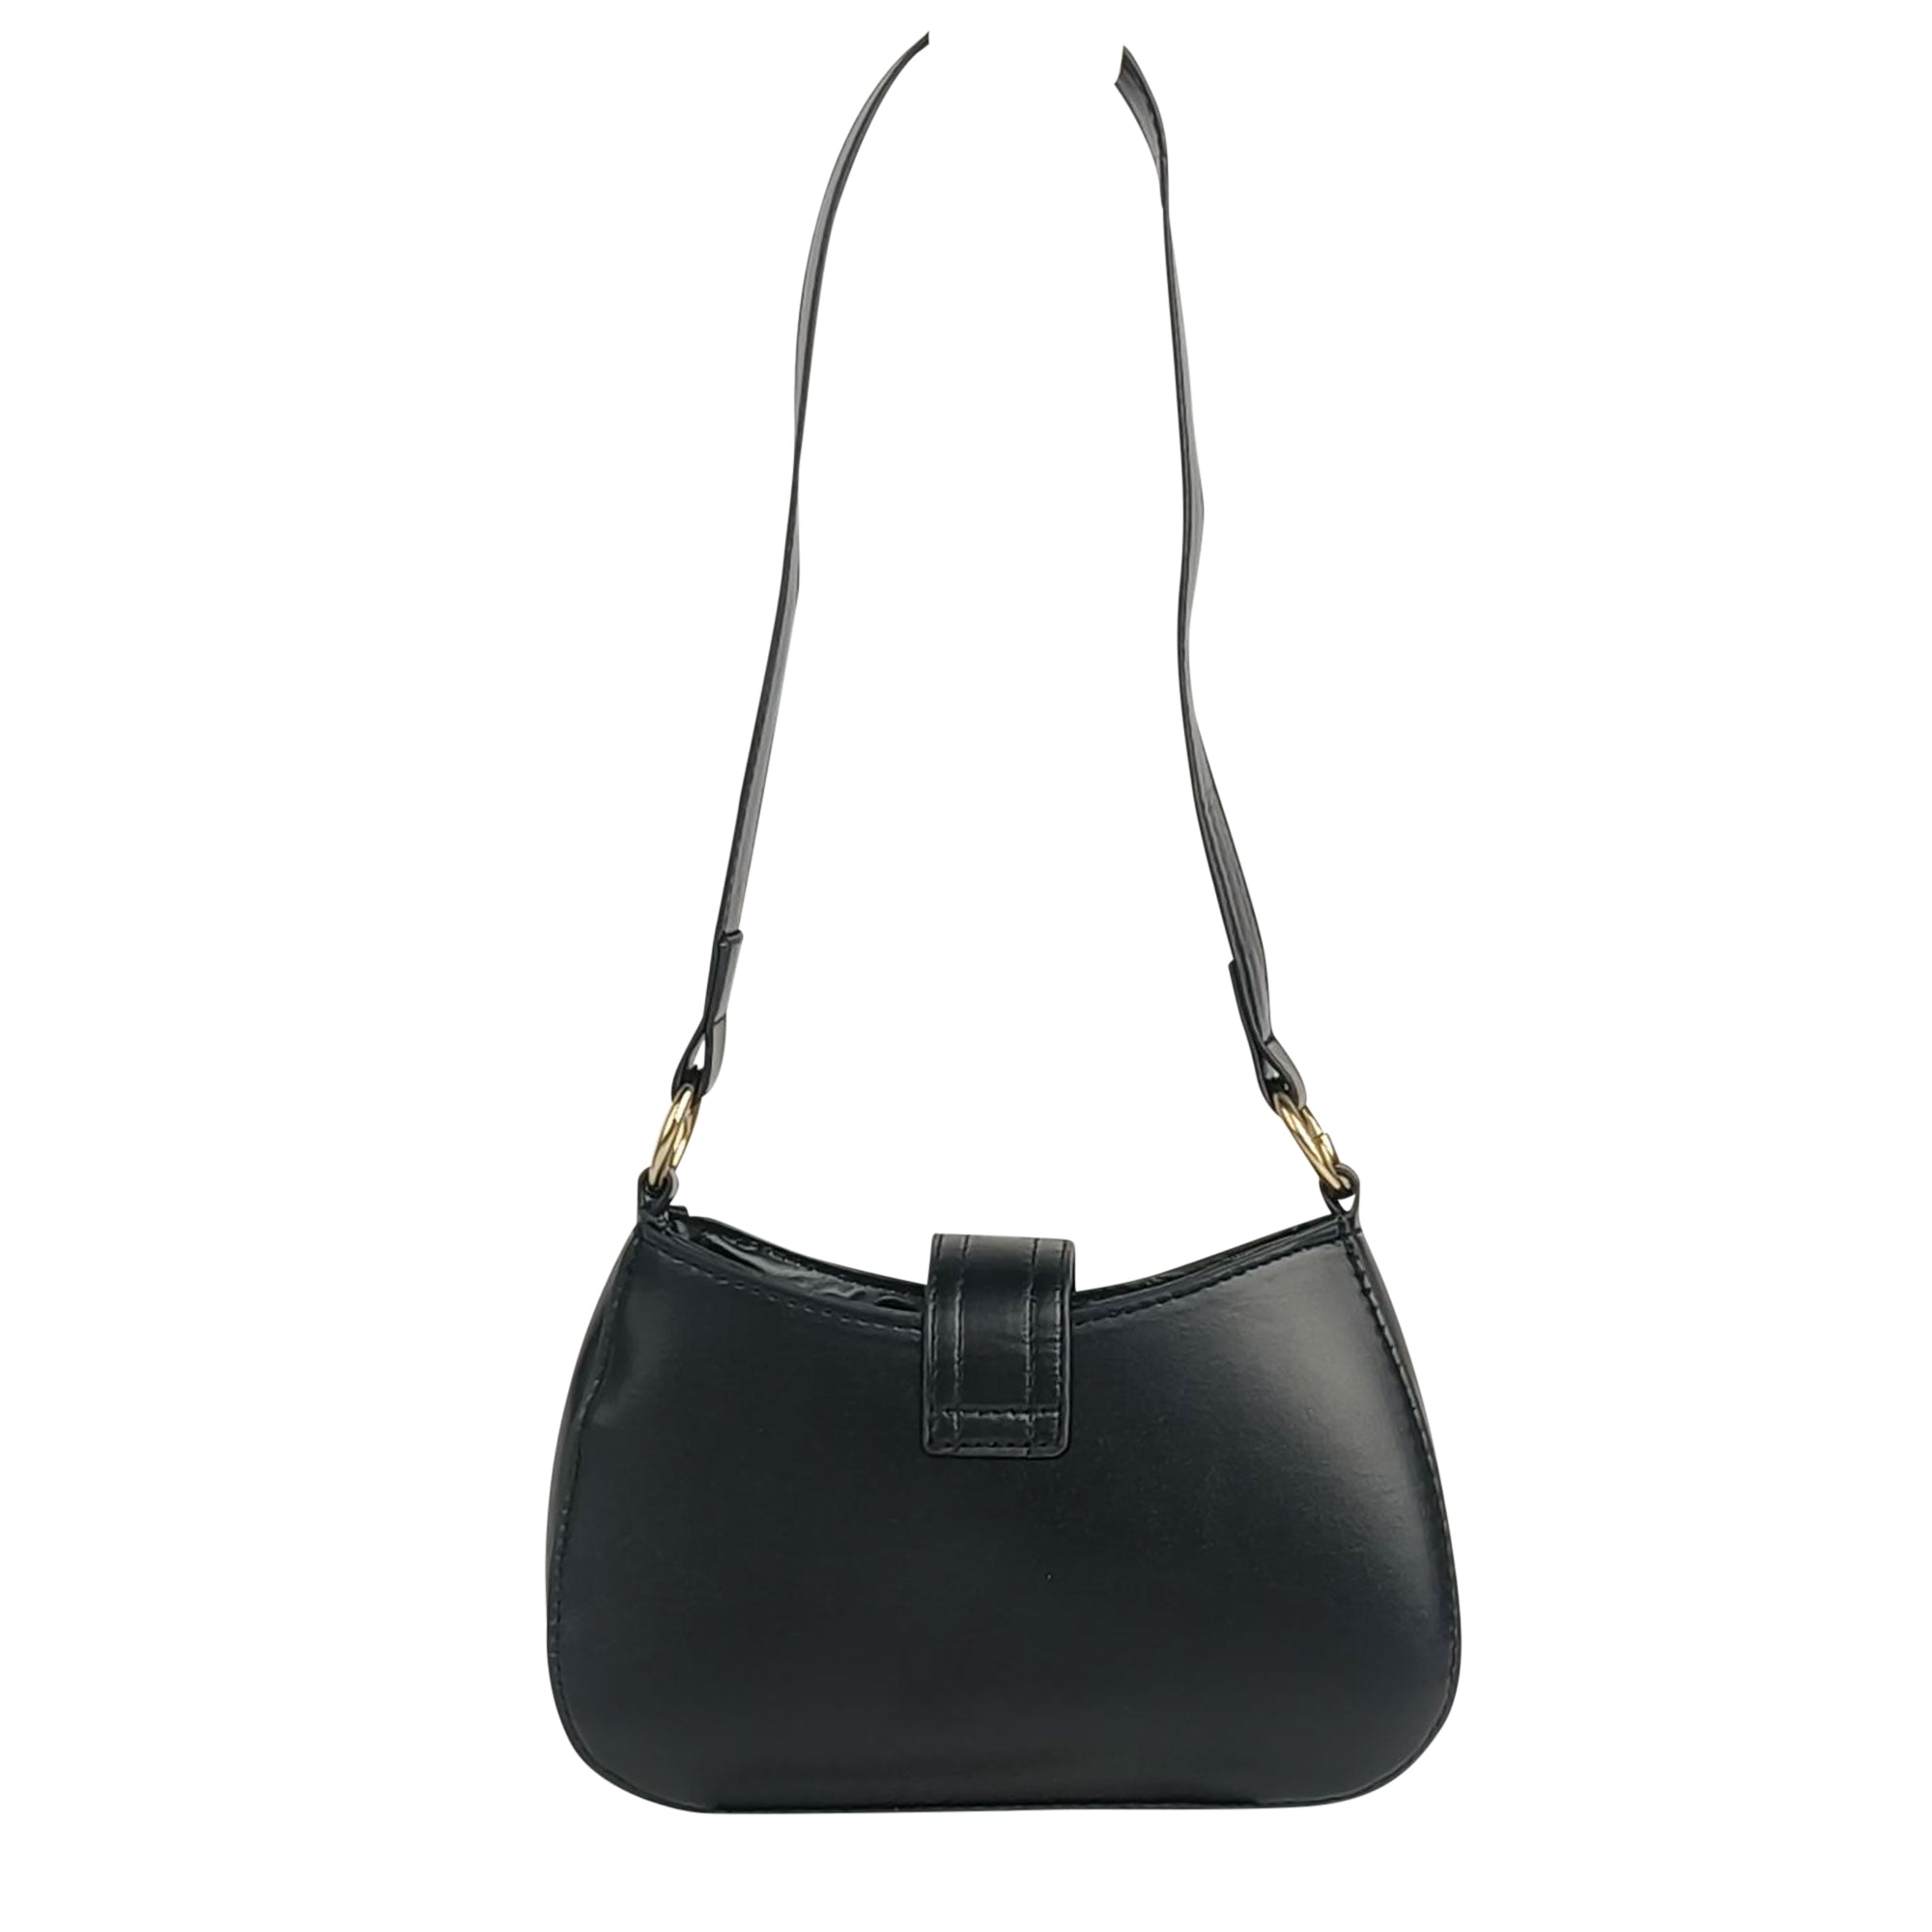 Black and White Curve Handbag